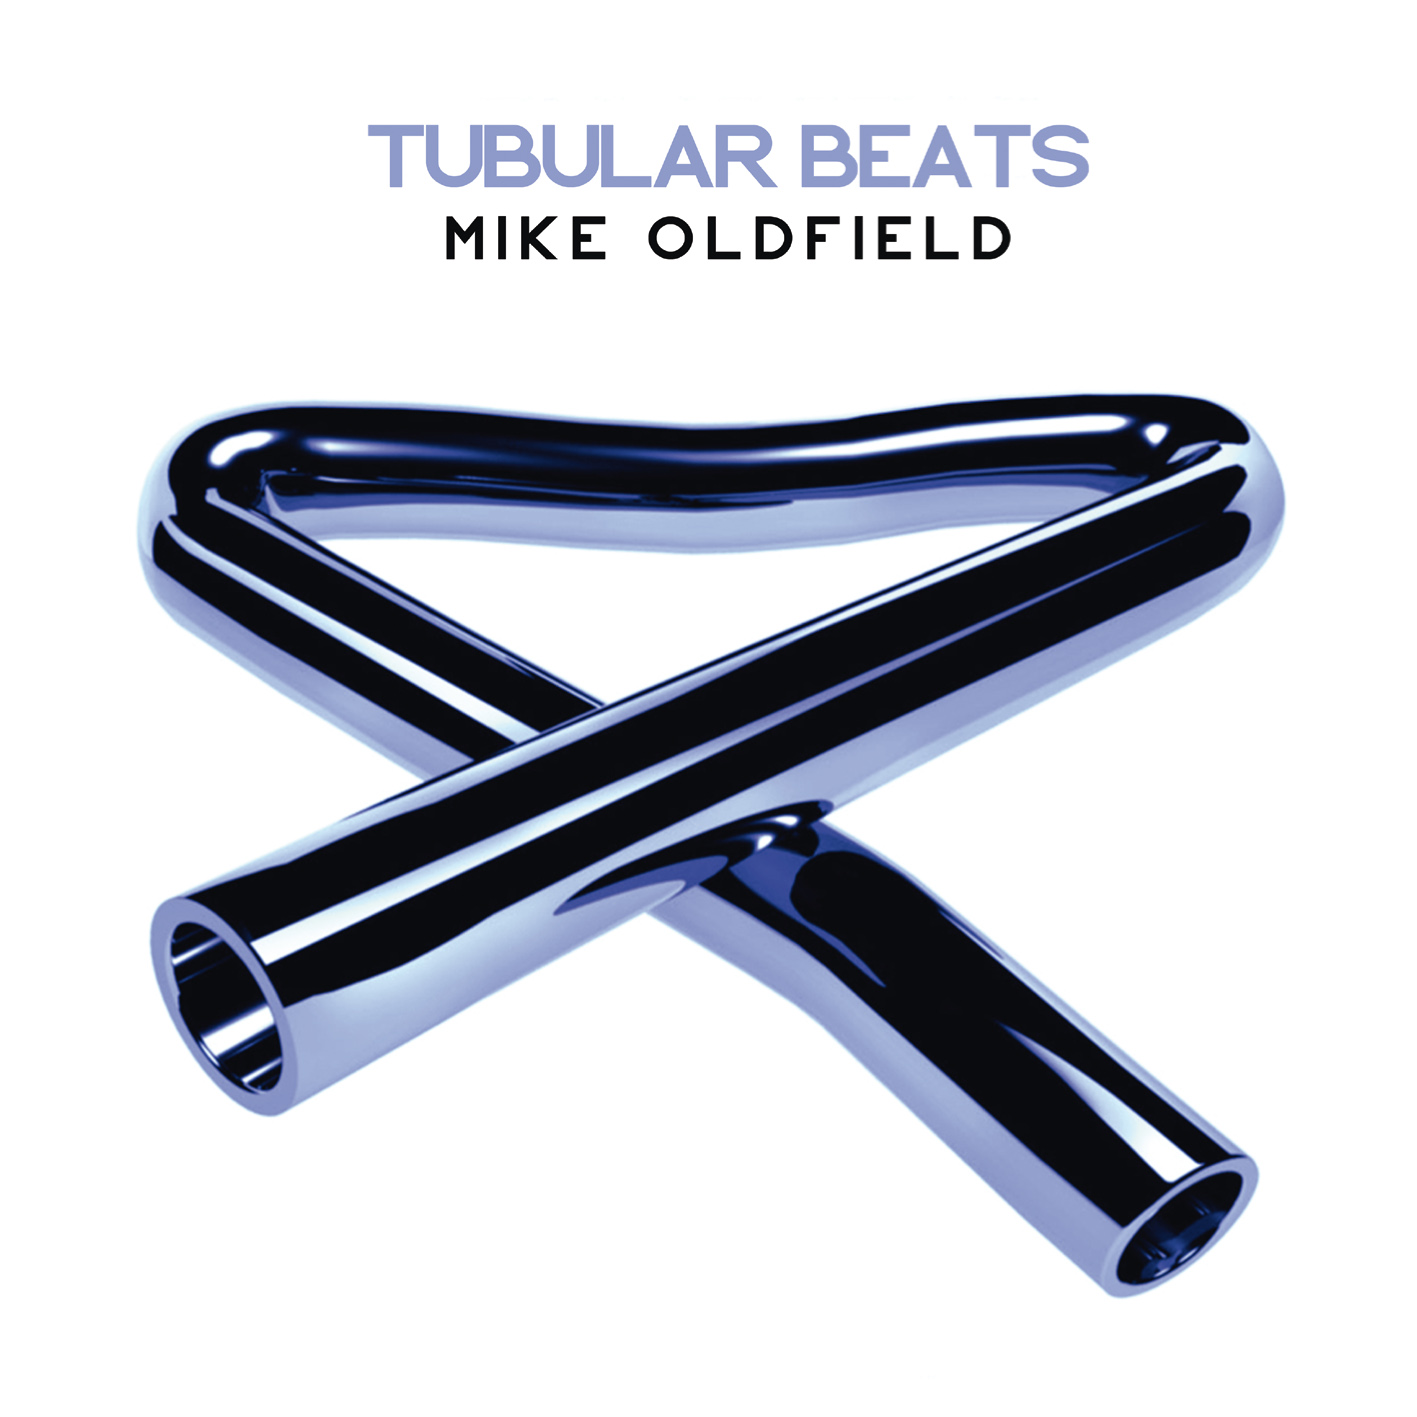 Mike Oldfield - Tubular Beats - CD